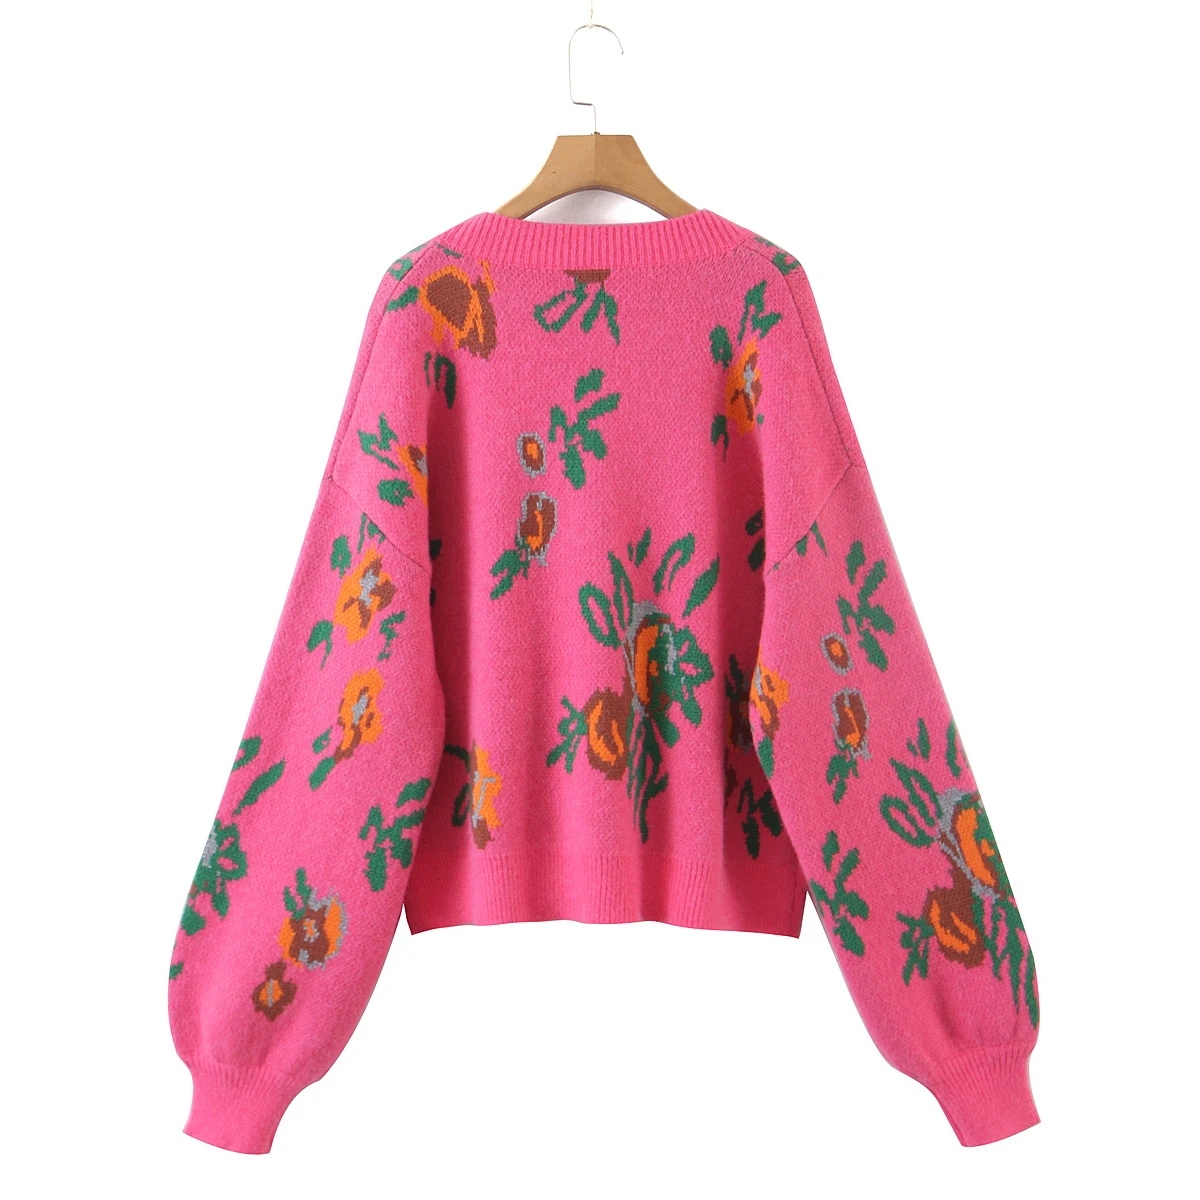 2021 Vintage Women Matching Sets Floral Cardigan Hot pink High Waist Loose Mini Shorts V neck Center Buttons Sweater 2pcs 1 Set womens underwear sets